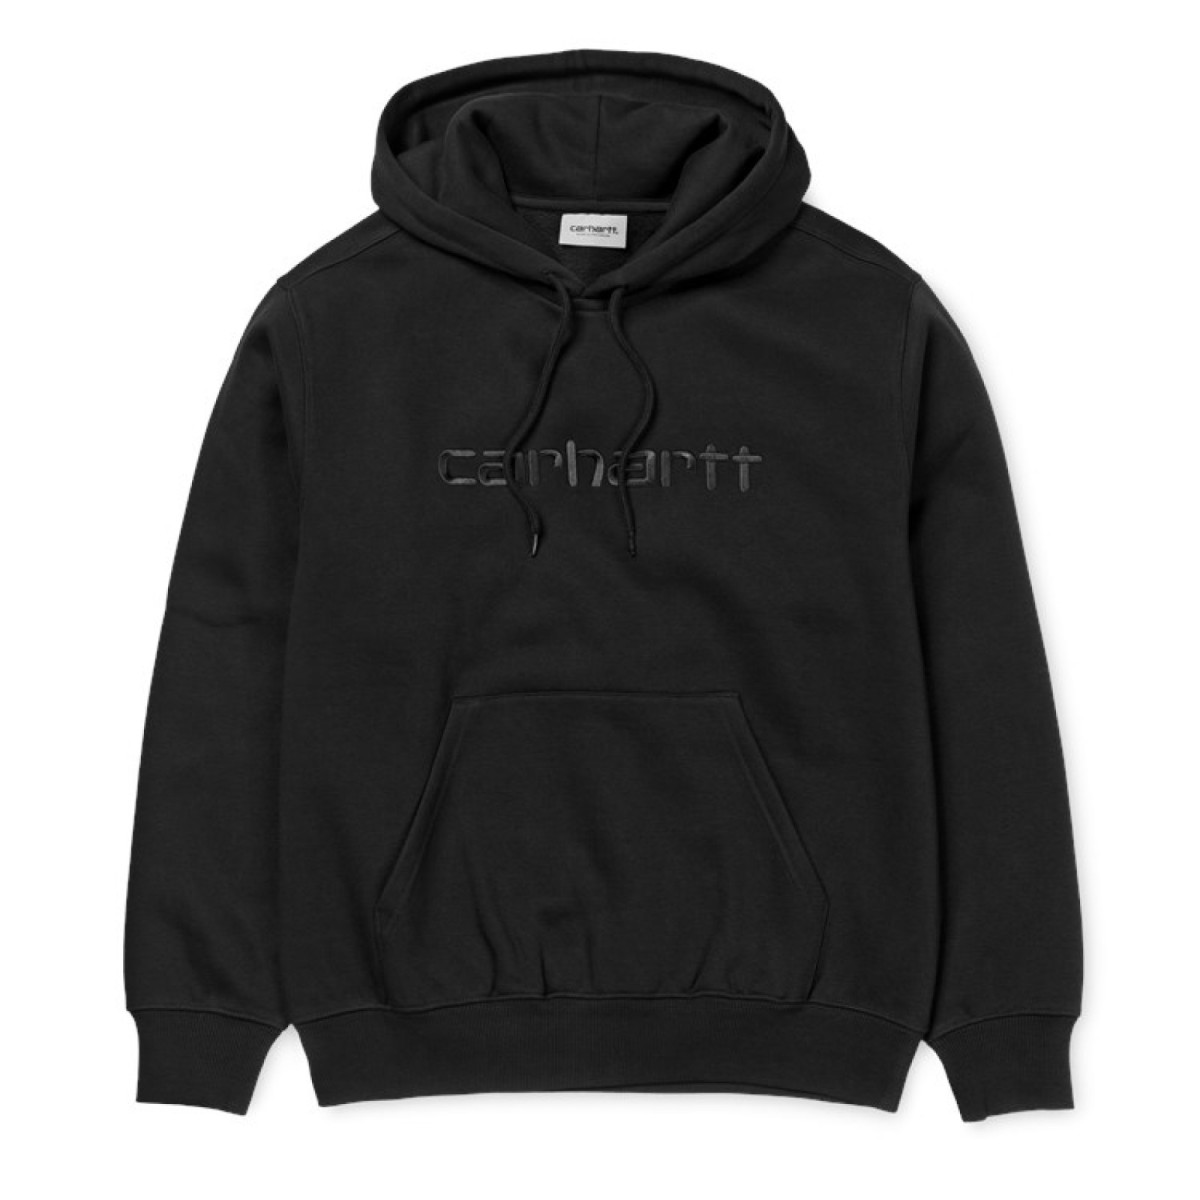 Carhartt Wip Hooded Carhartt Embroidered Sweatshirt Black / Black - Penloe